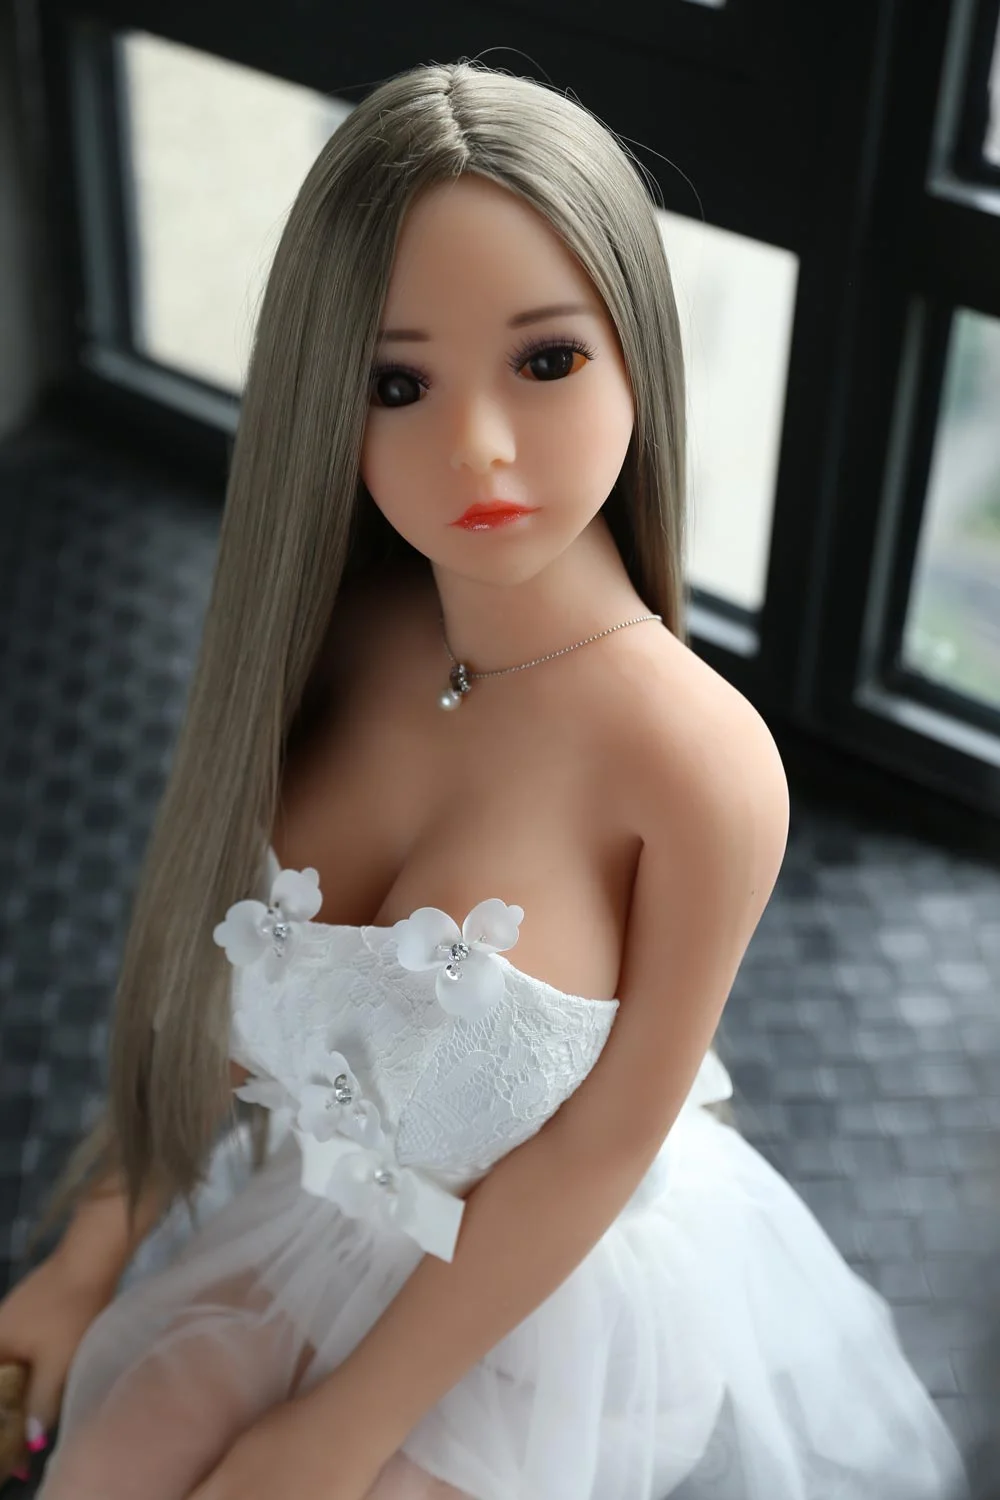 Mini sex doll with big black eyes